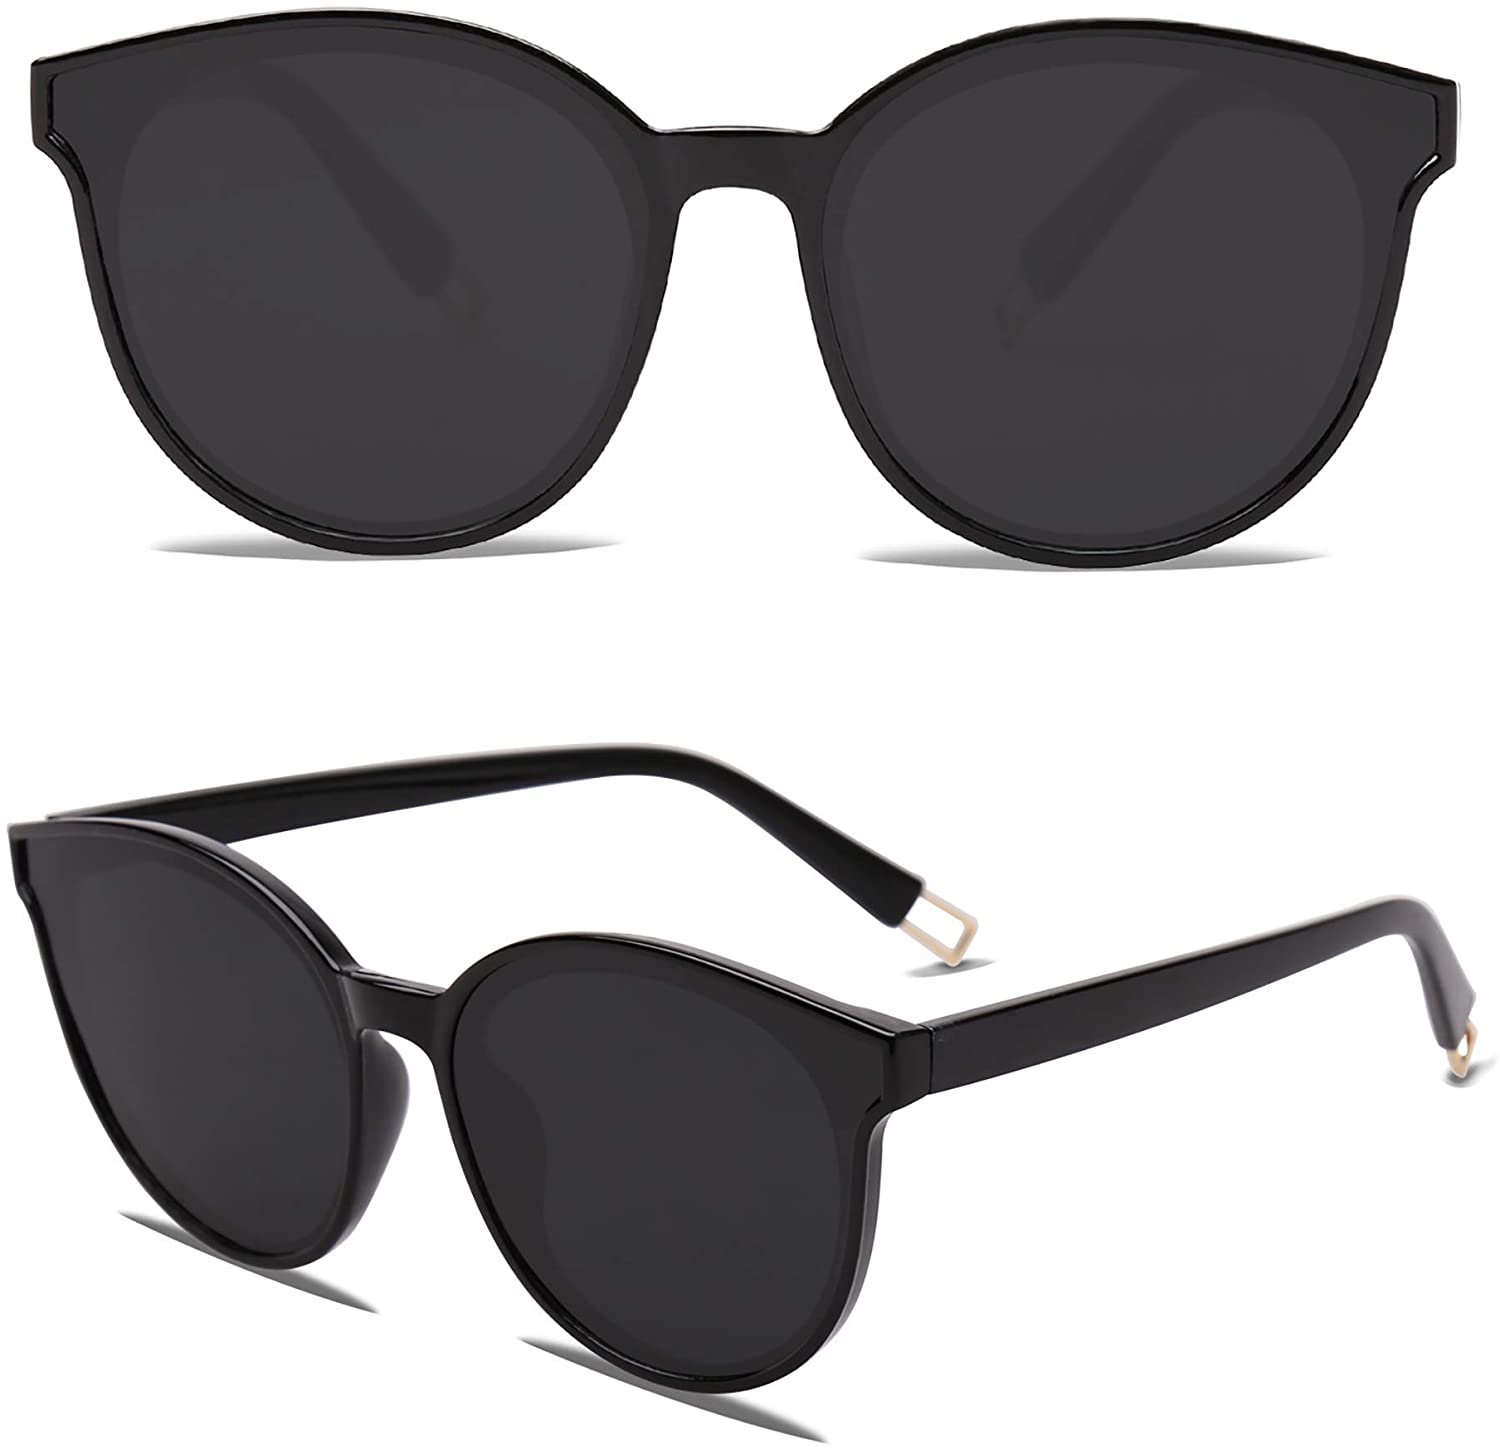 SOJOS Fashion Round Sunglasses for Women Men Oversized Vintage Shades SJ2057 